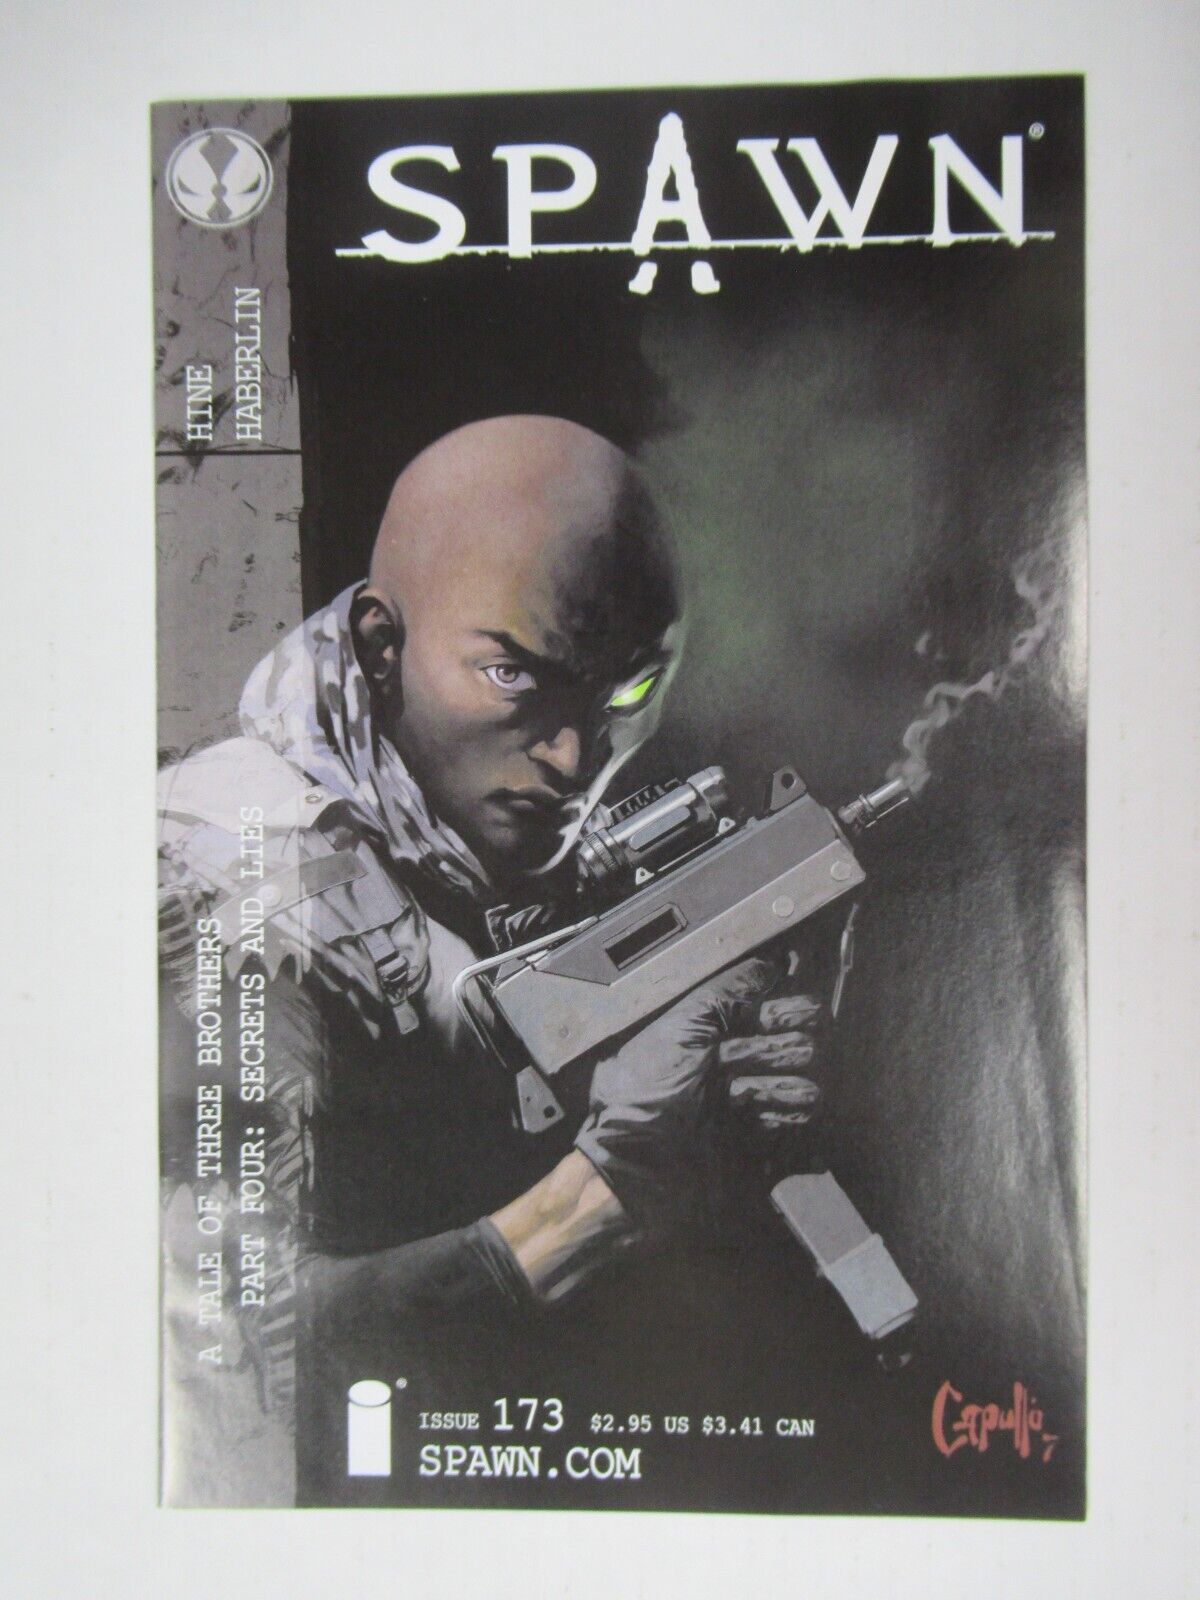 2007 Image Comics Spawn #173